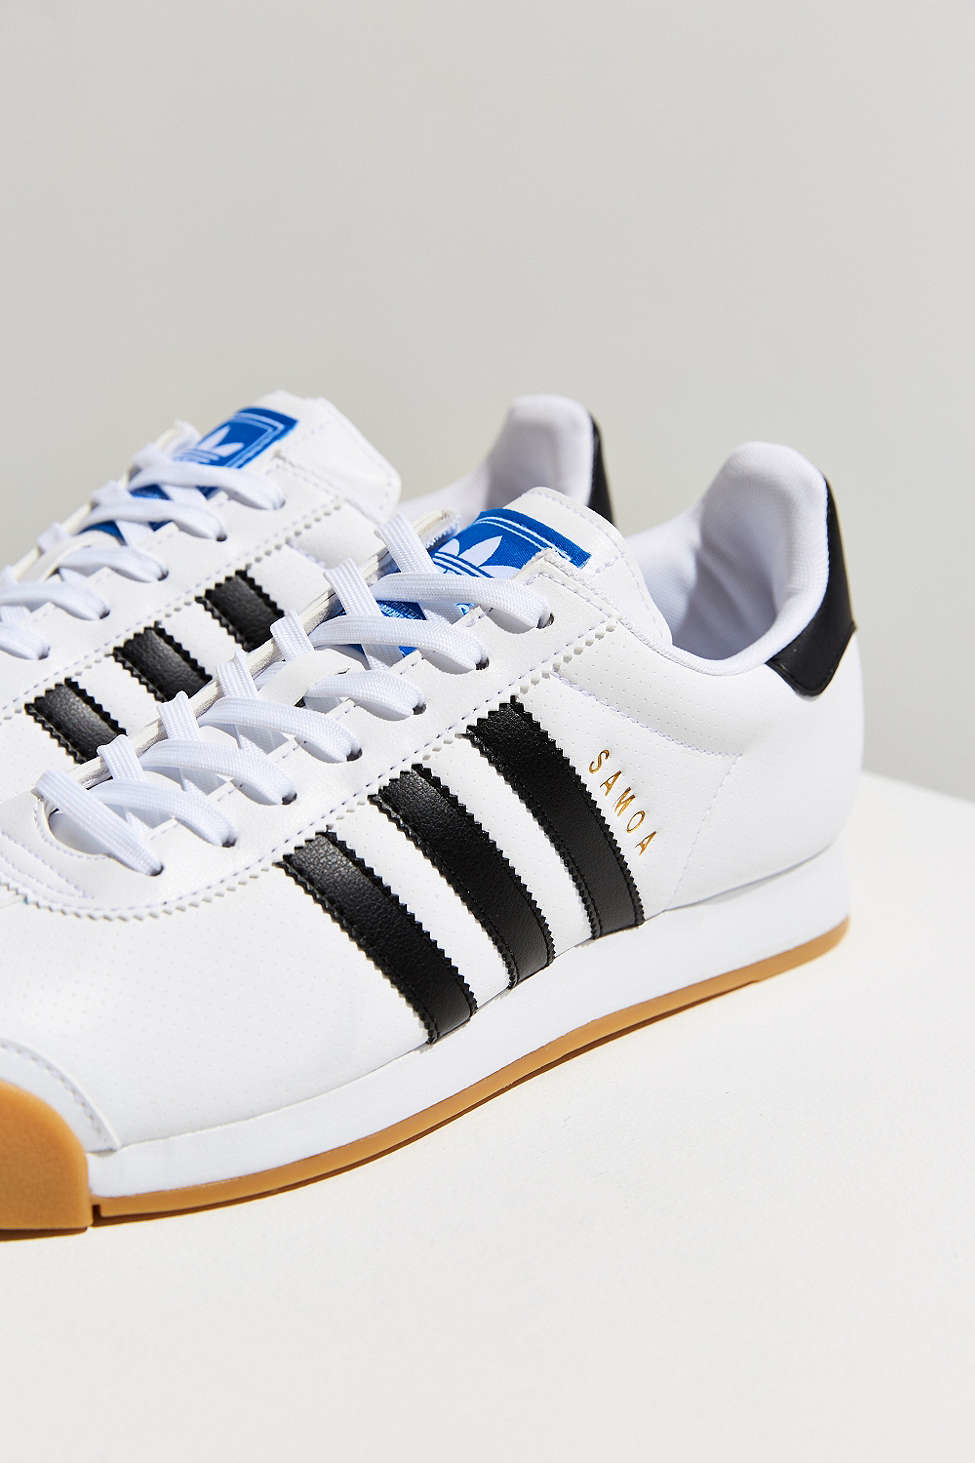 Adidas originals Samoa Perforated Gum Sole Sneaker in White | Lyst